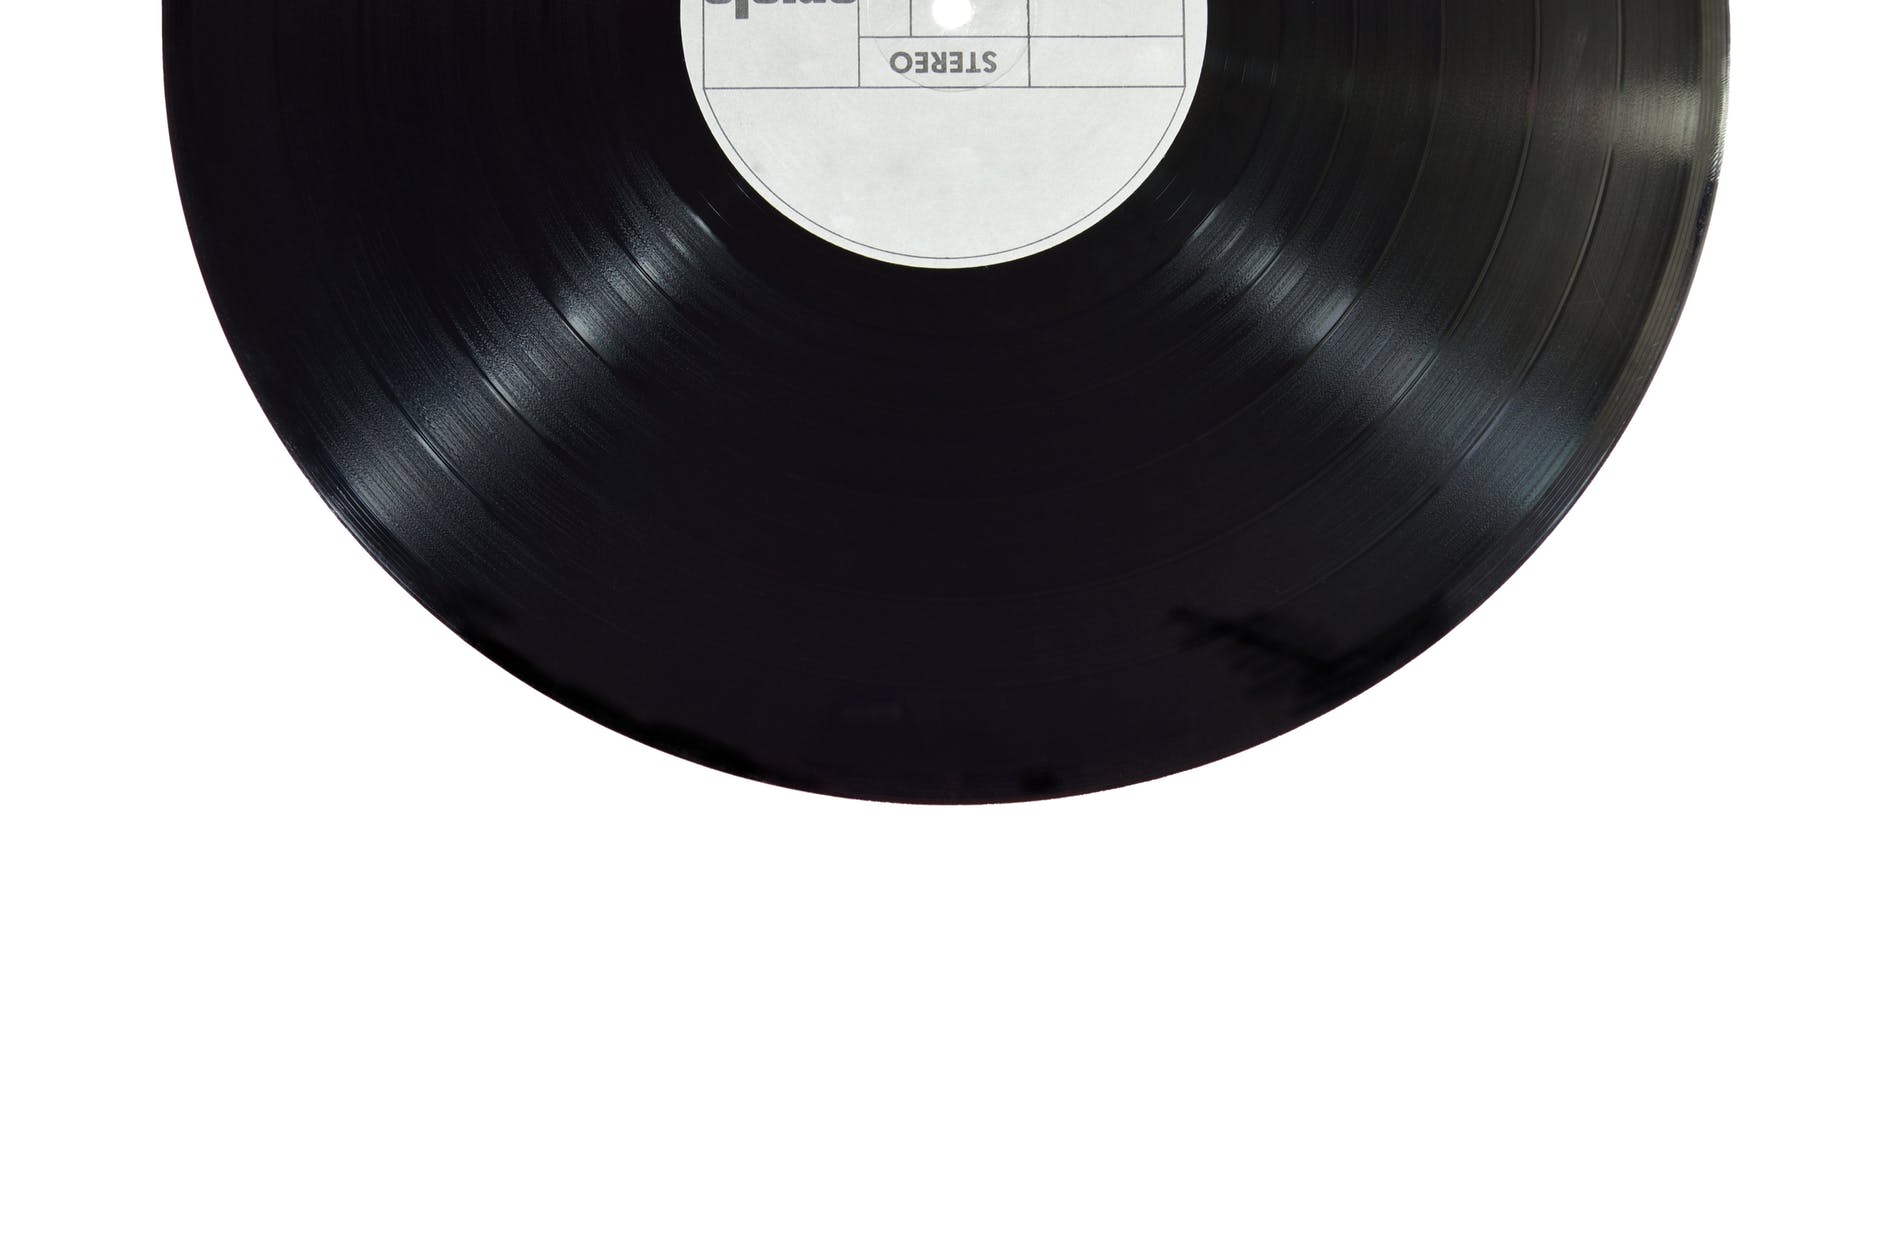  A vinyl record.